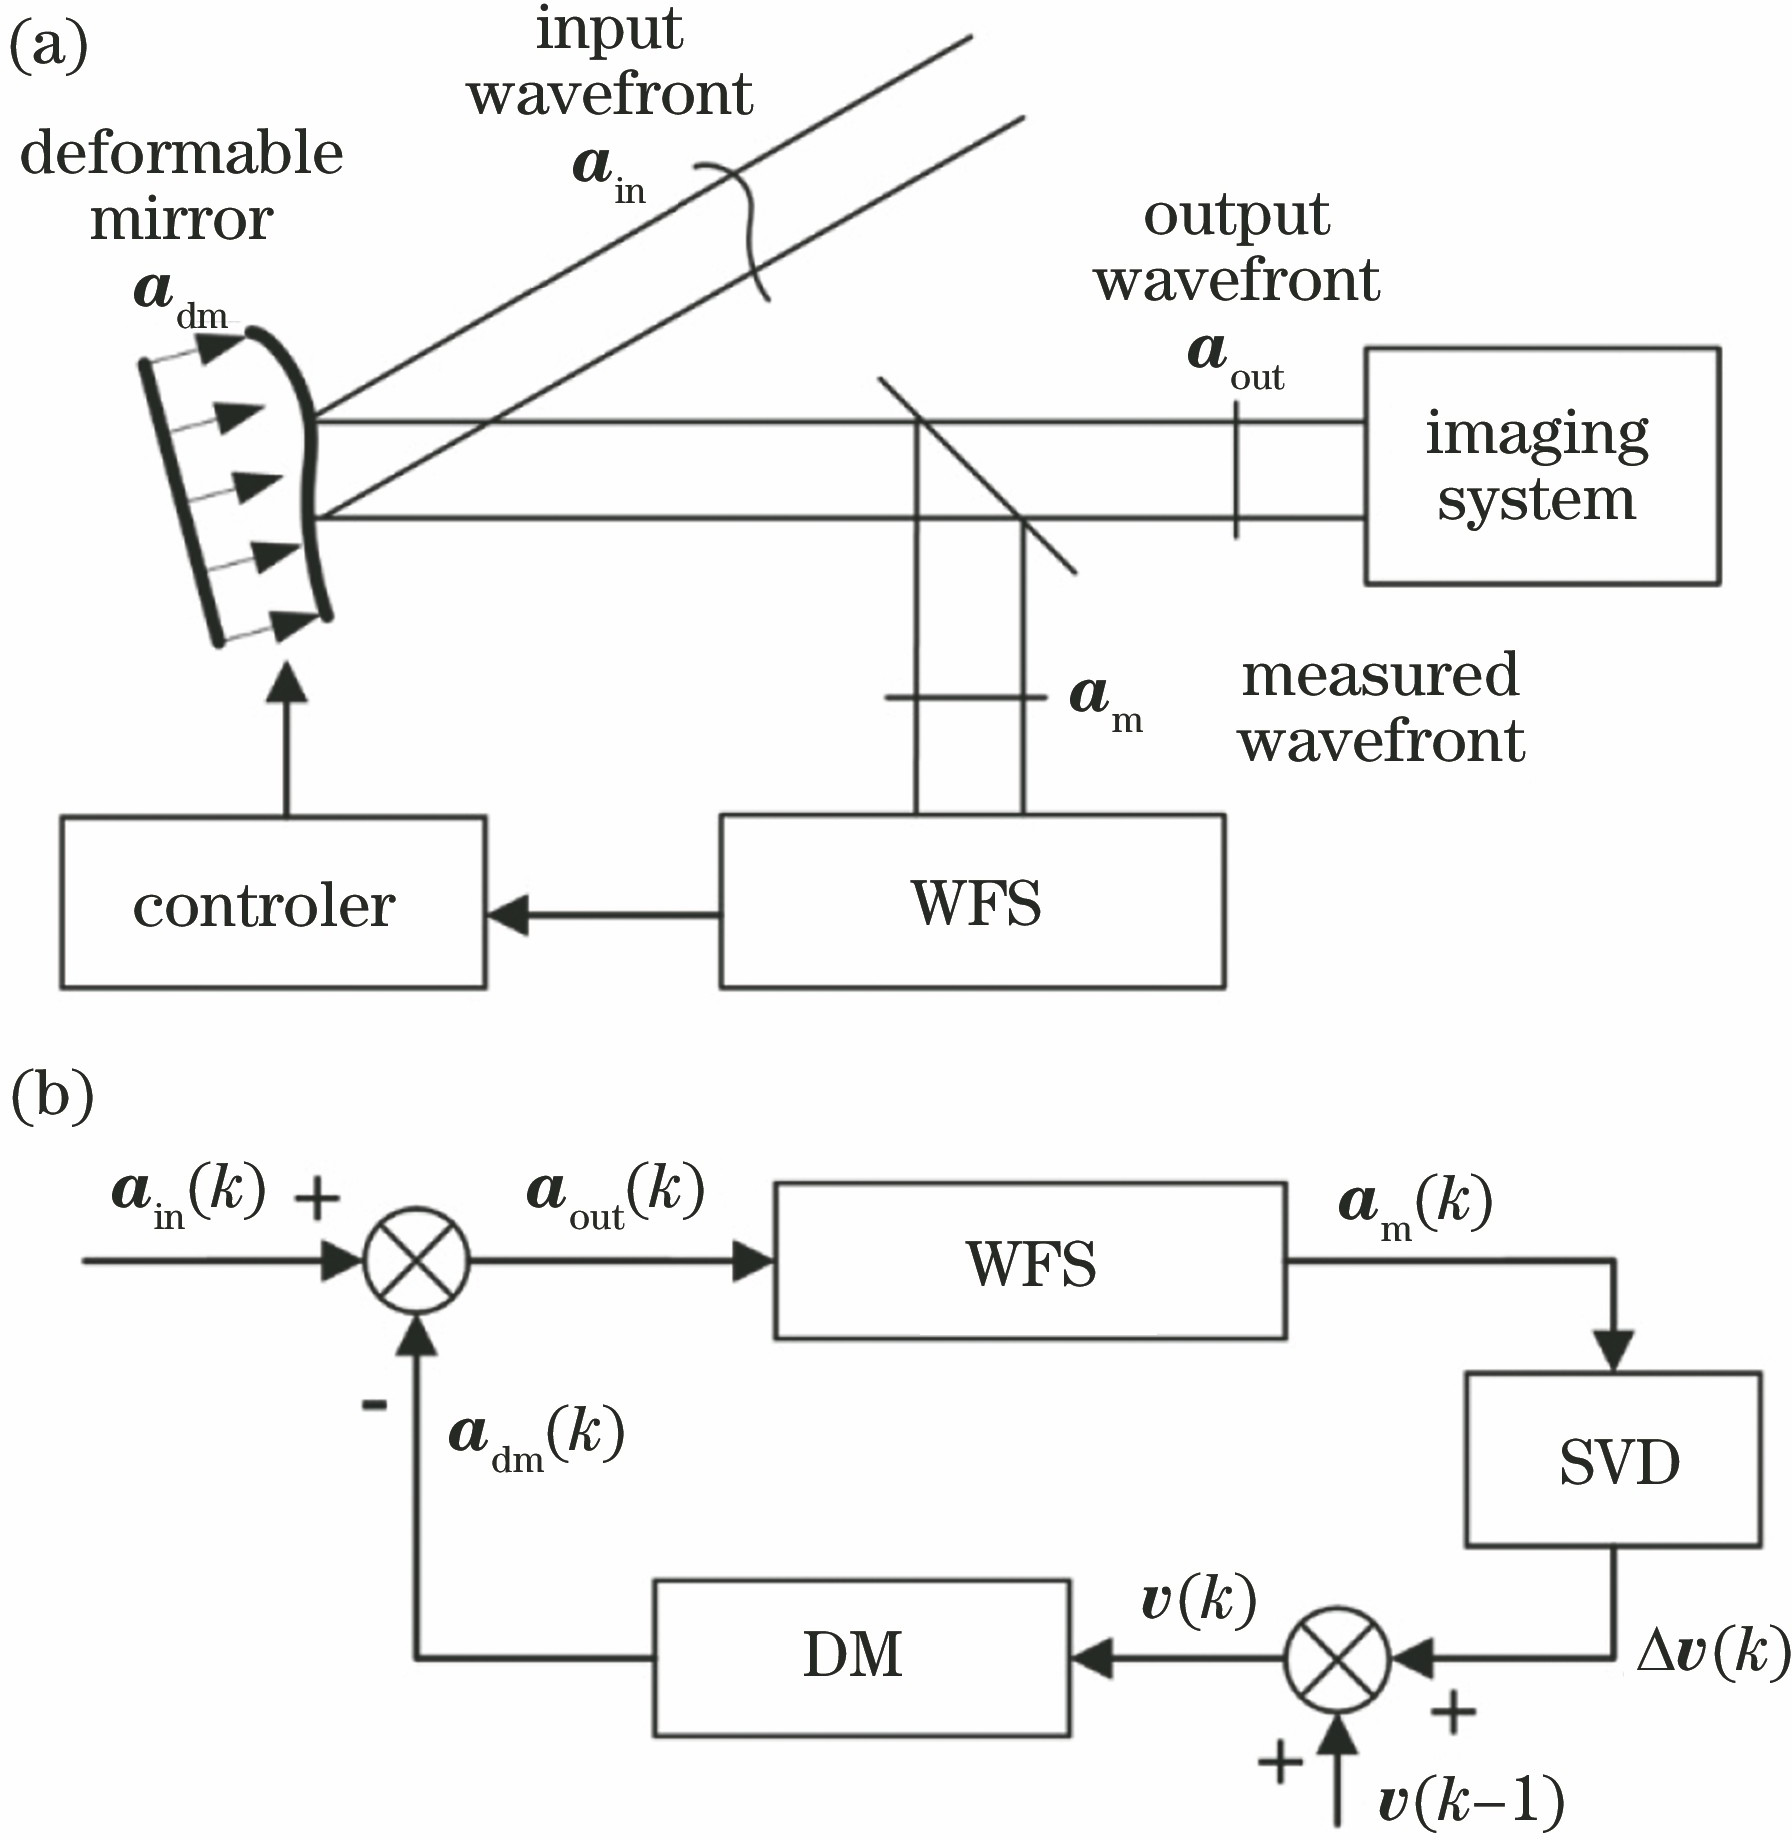 Typical closed-loop control system of deformable mirror. (a) Principle diagram of adaptive optics system; (b) block diagram of closed-loop control of deformable mirror